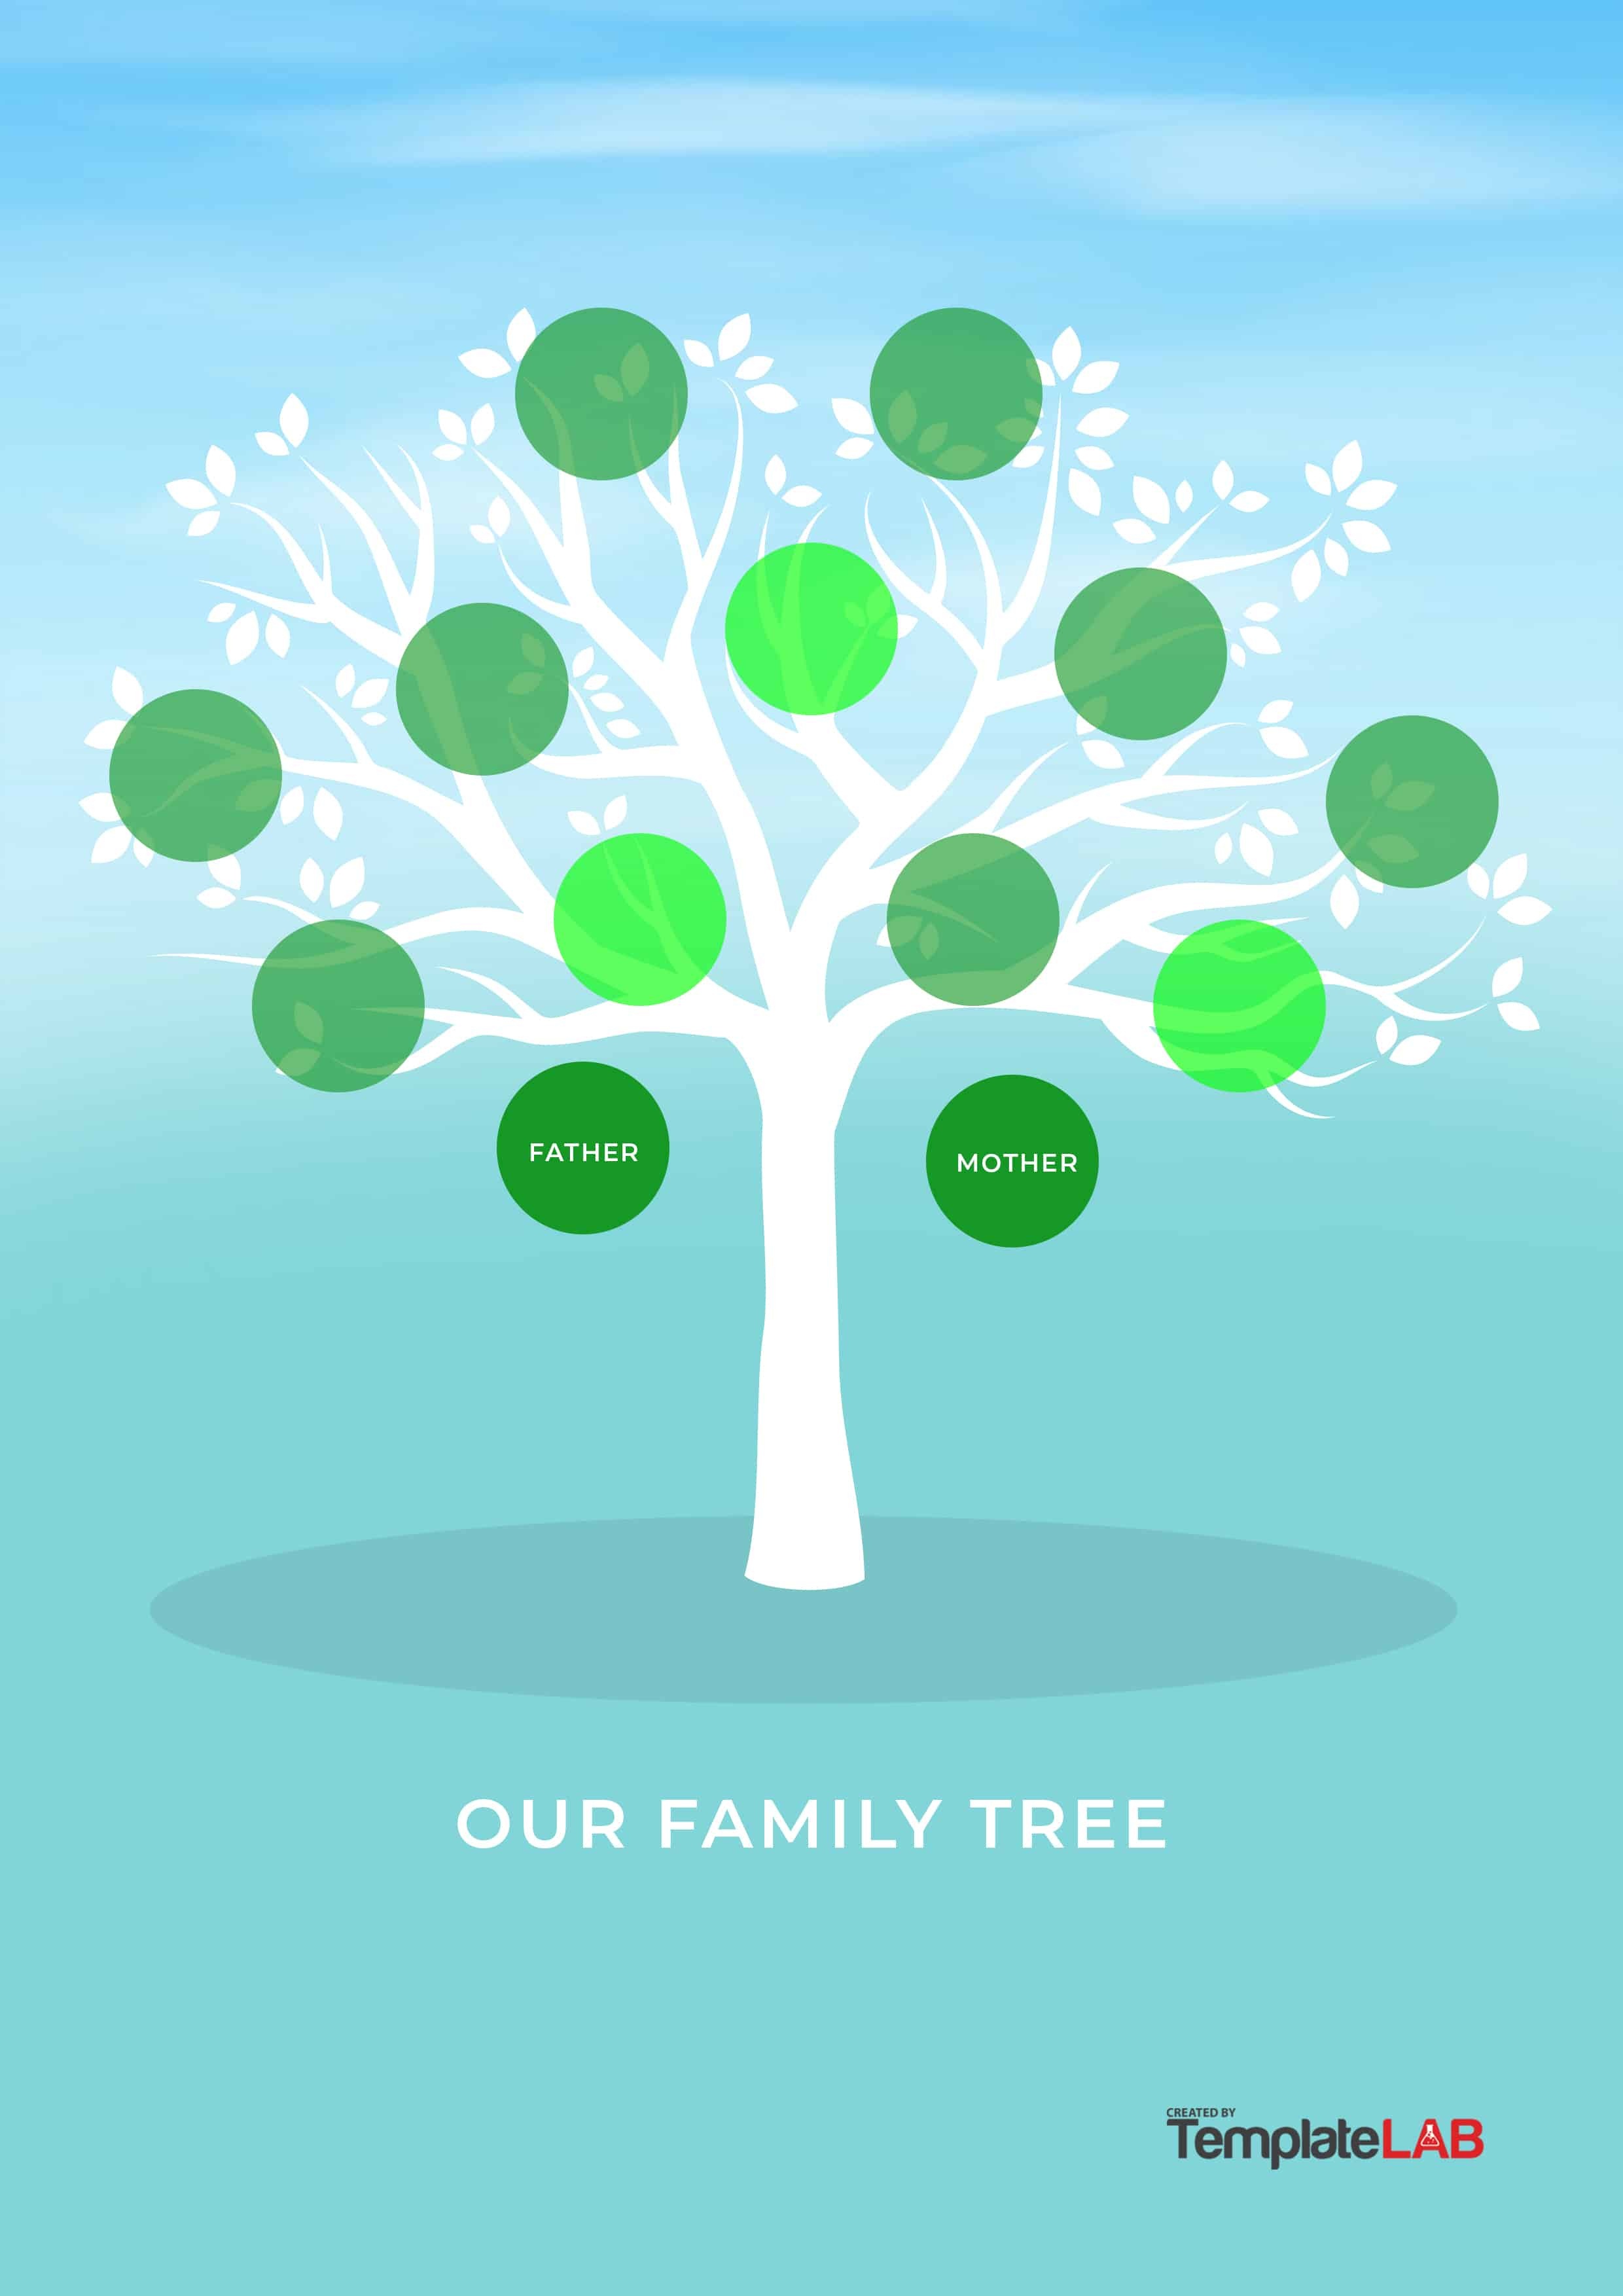 50+ Free Family Tree Templates (Word, Excel, Pdf) ᐅ Template Lab - Free Printable Family Tree